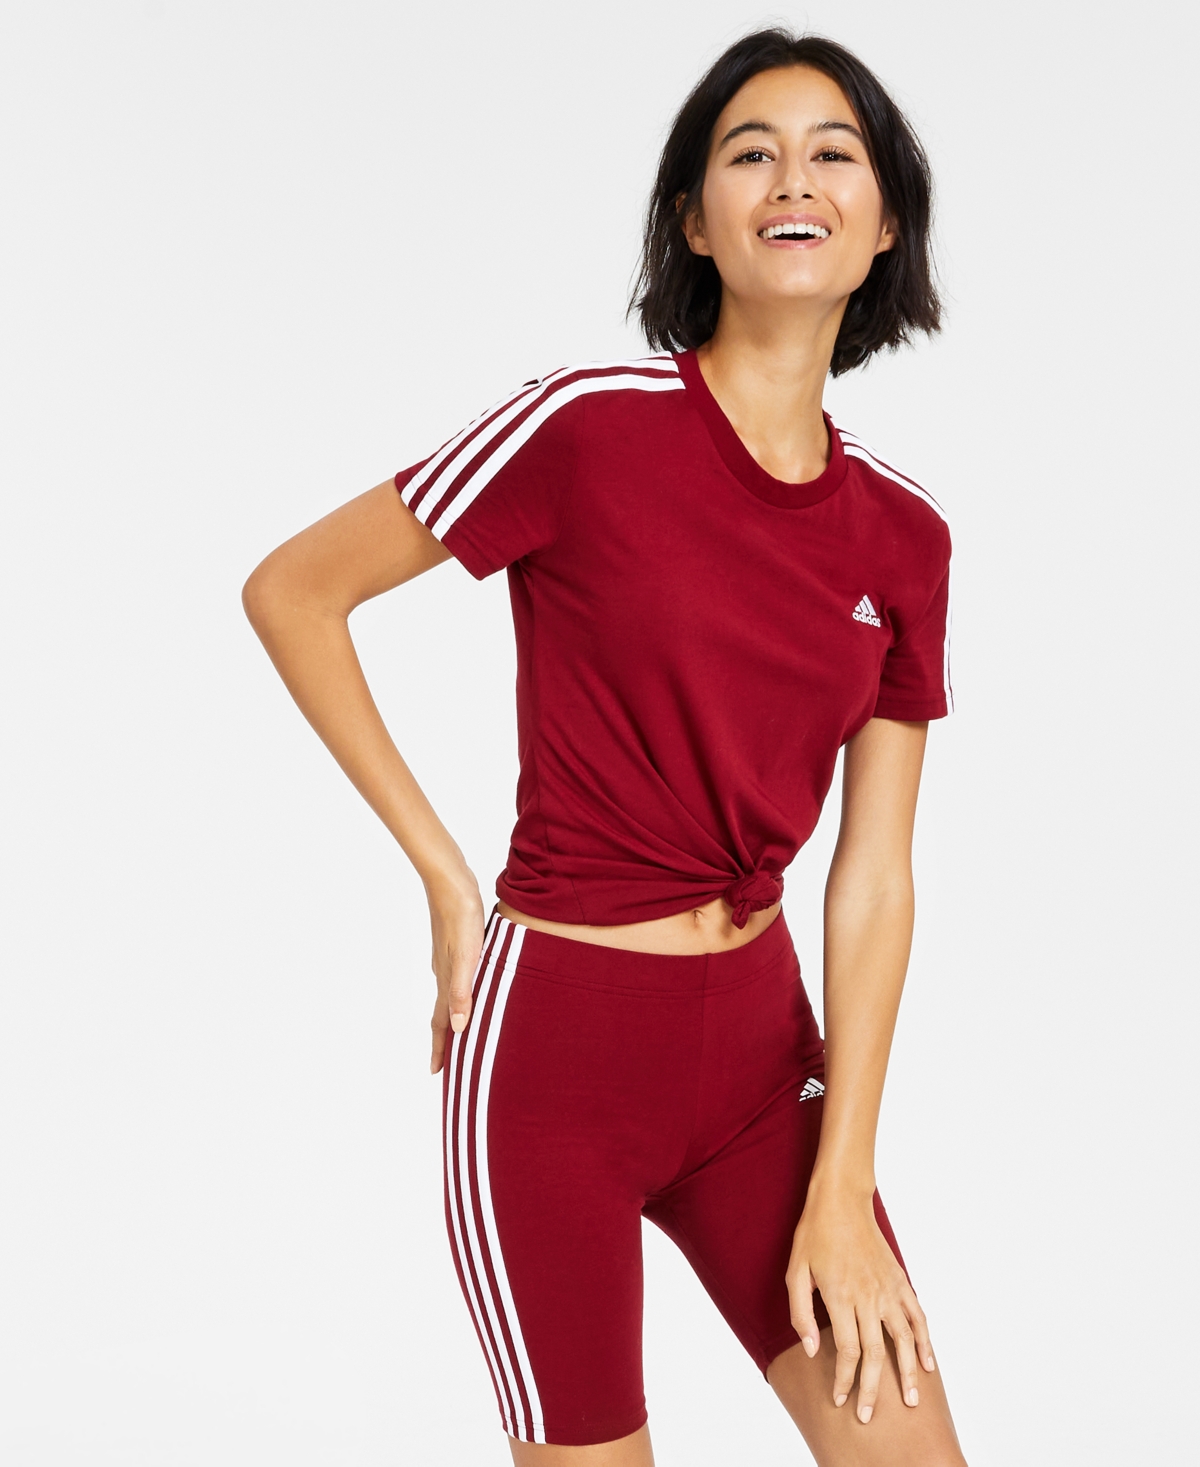 adidas Women's Essentials Slim 3-Stripes T-Shirt